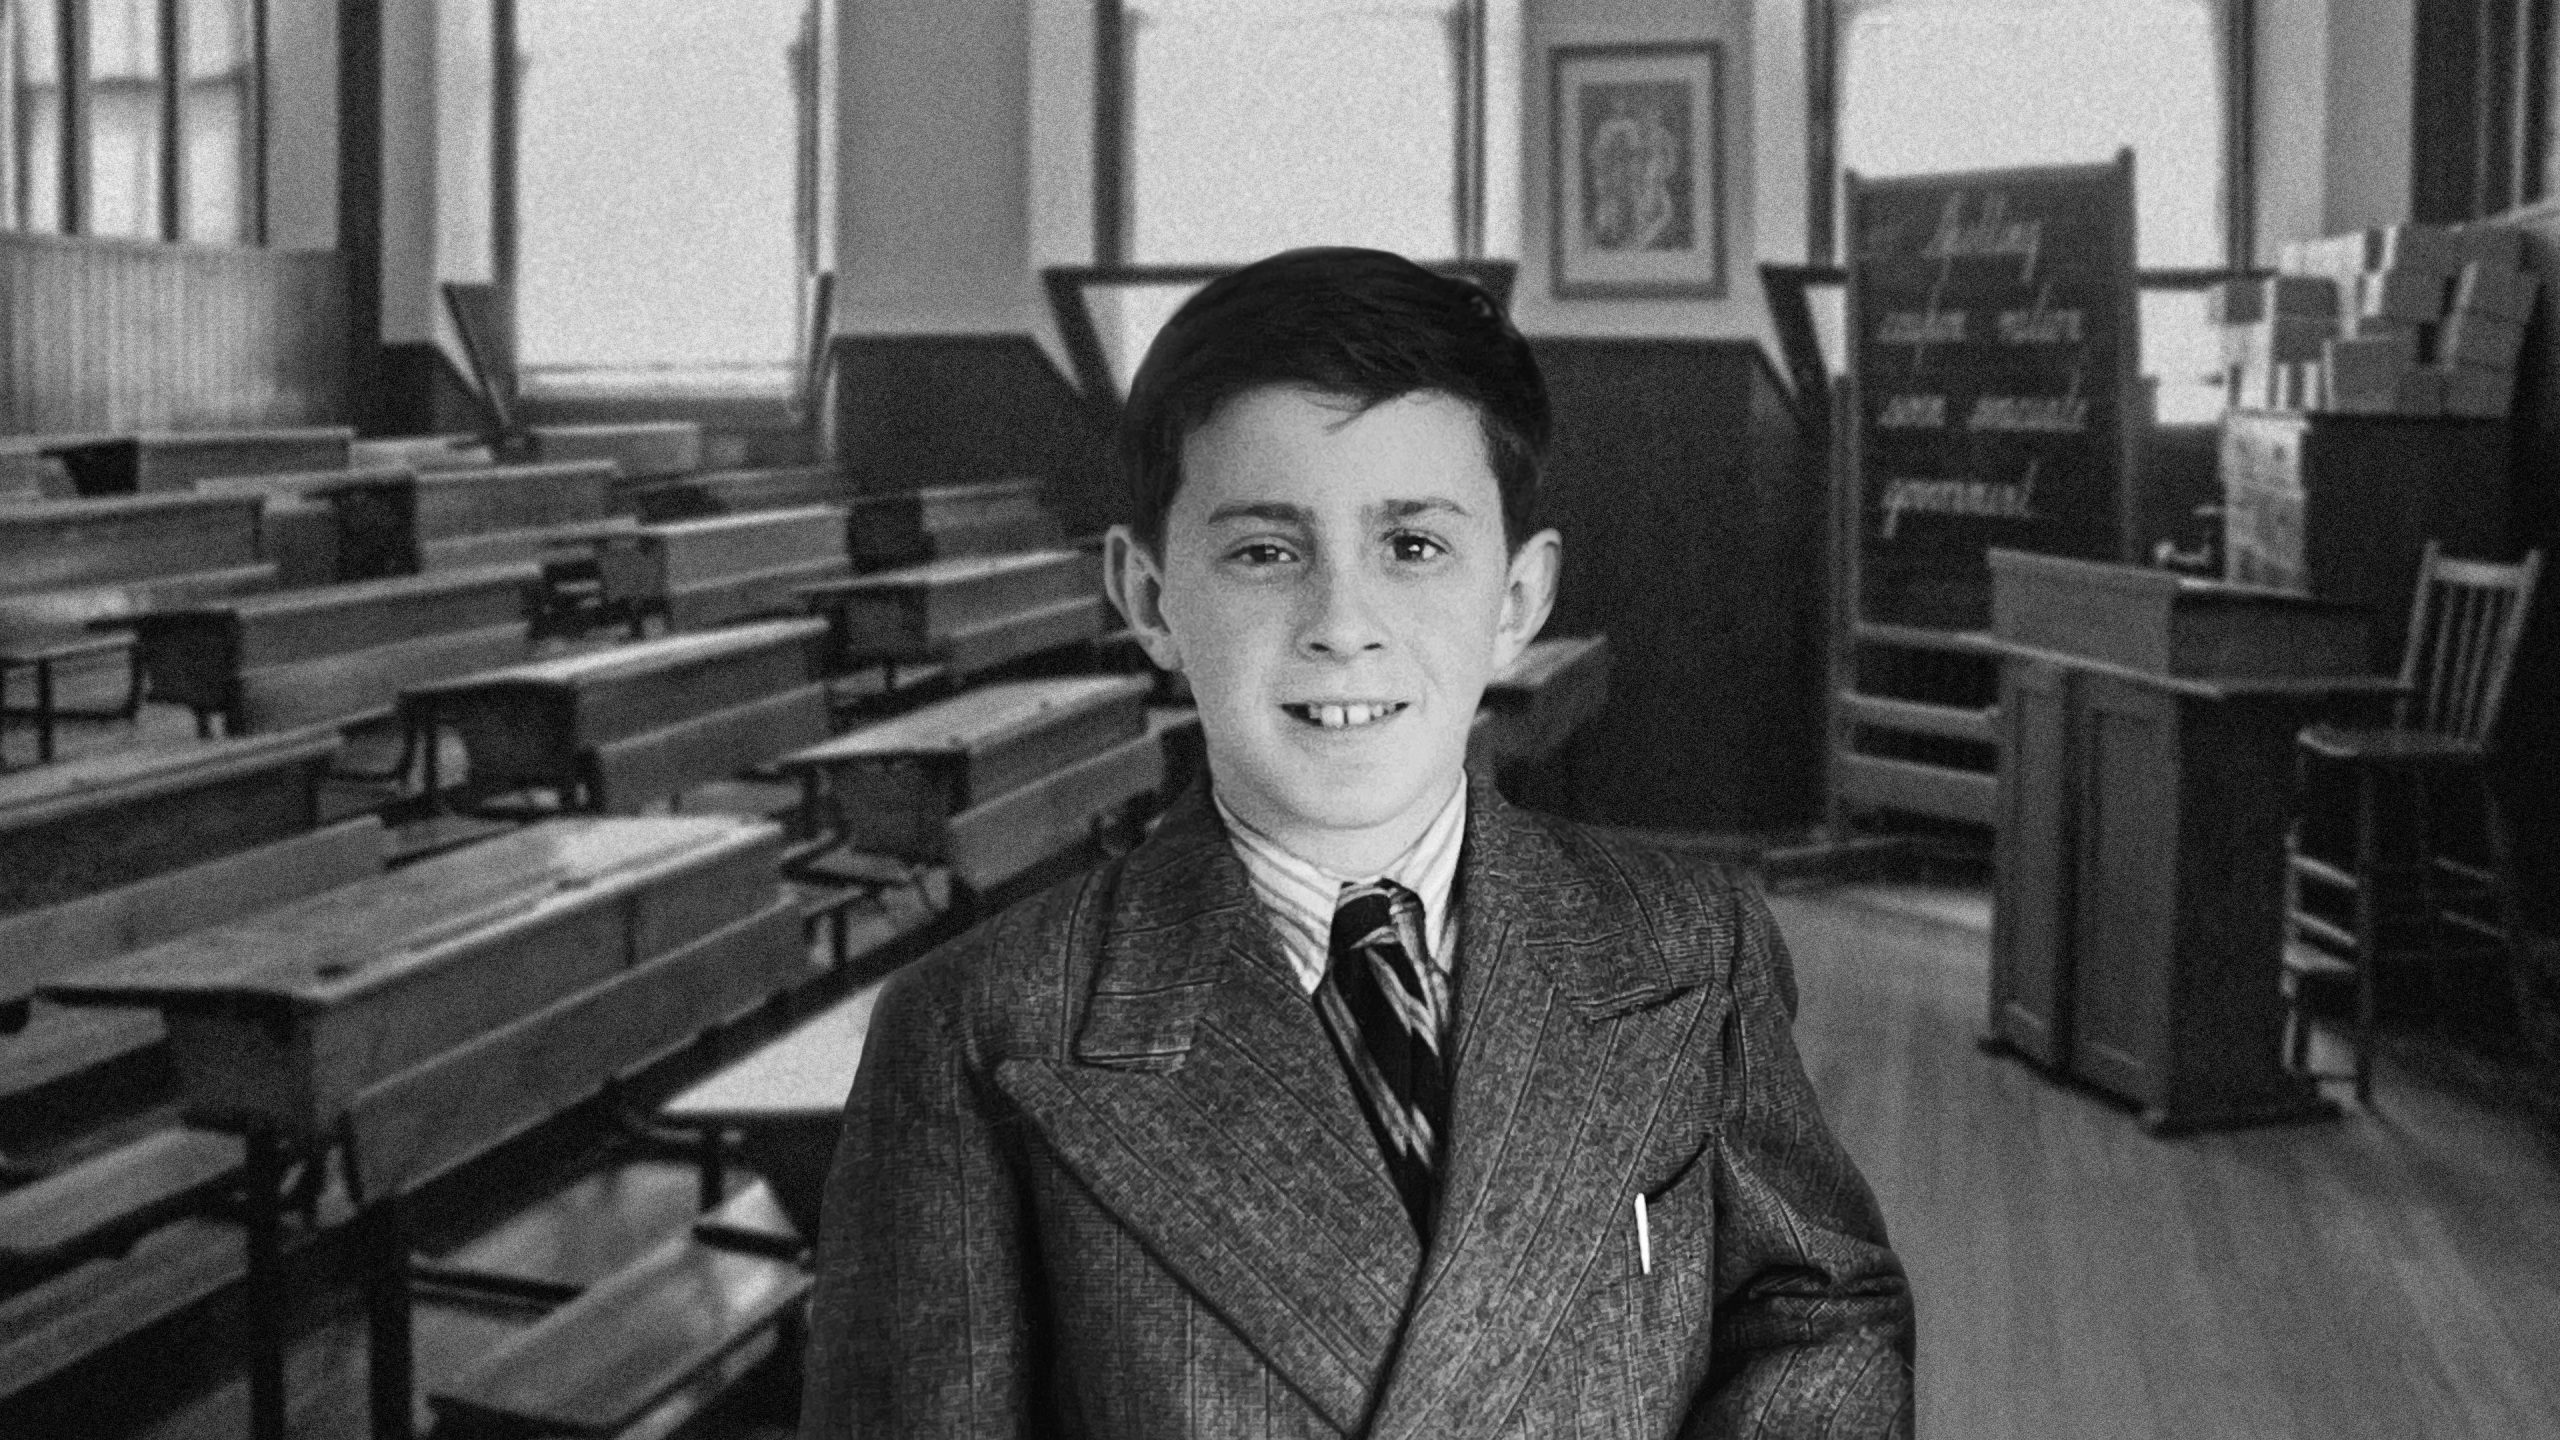 Sir Jackie Stewart as a child in school